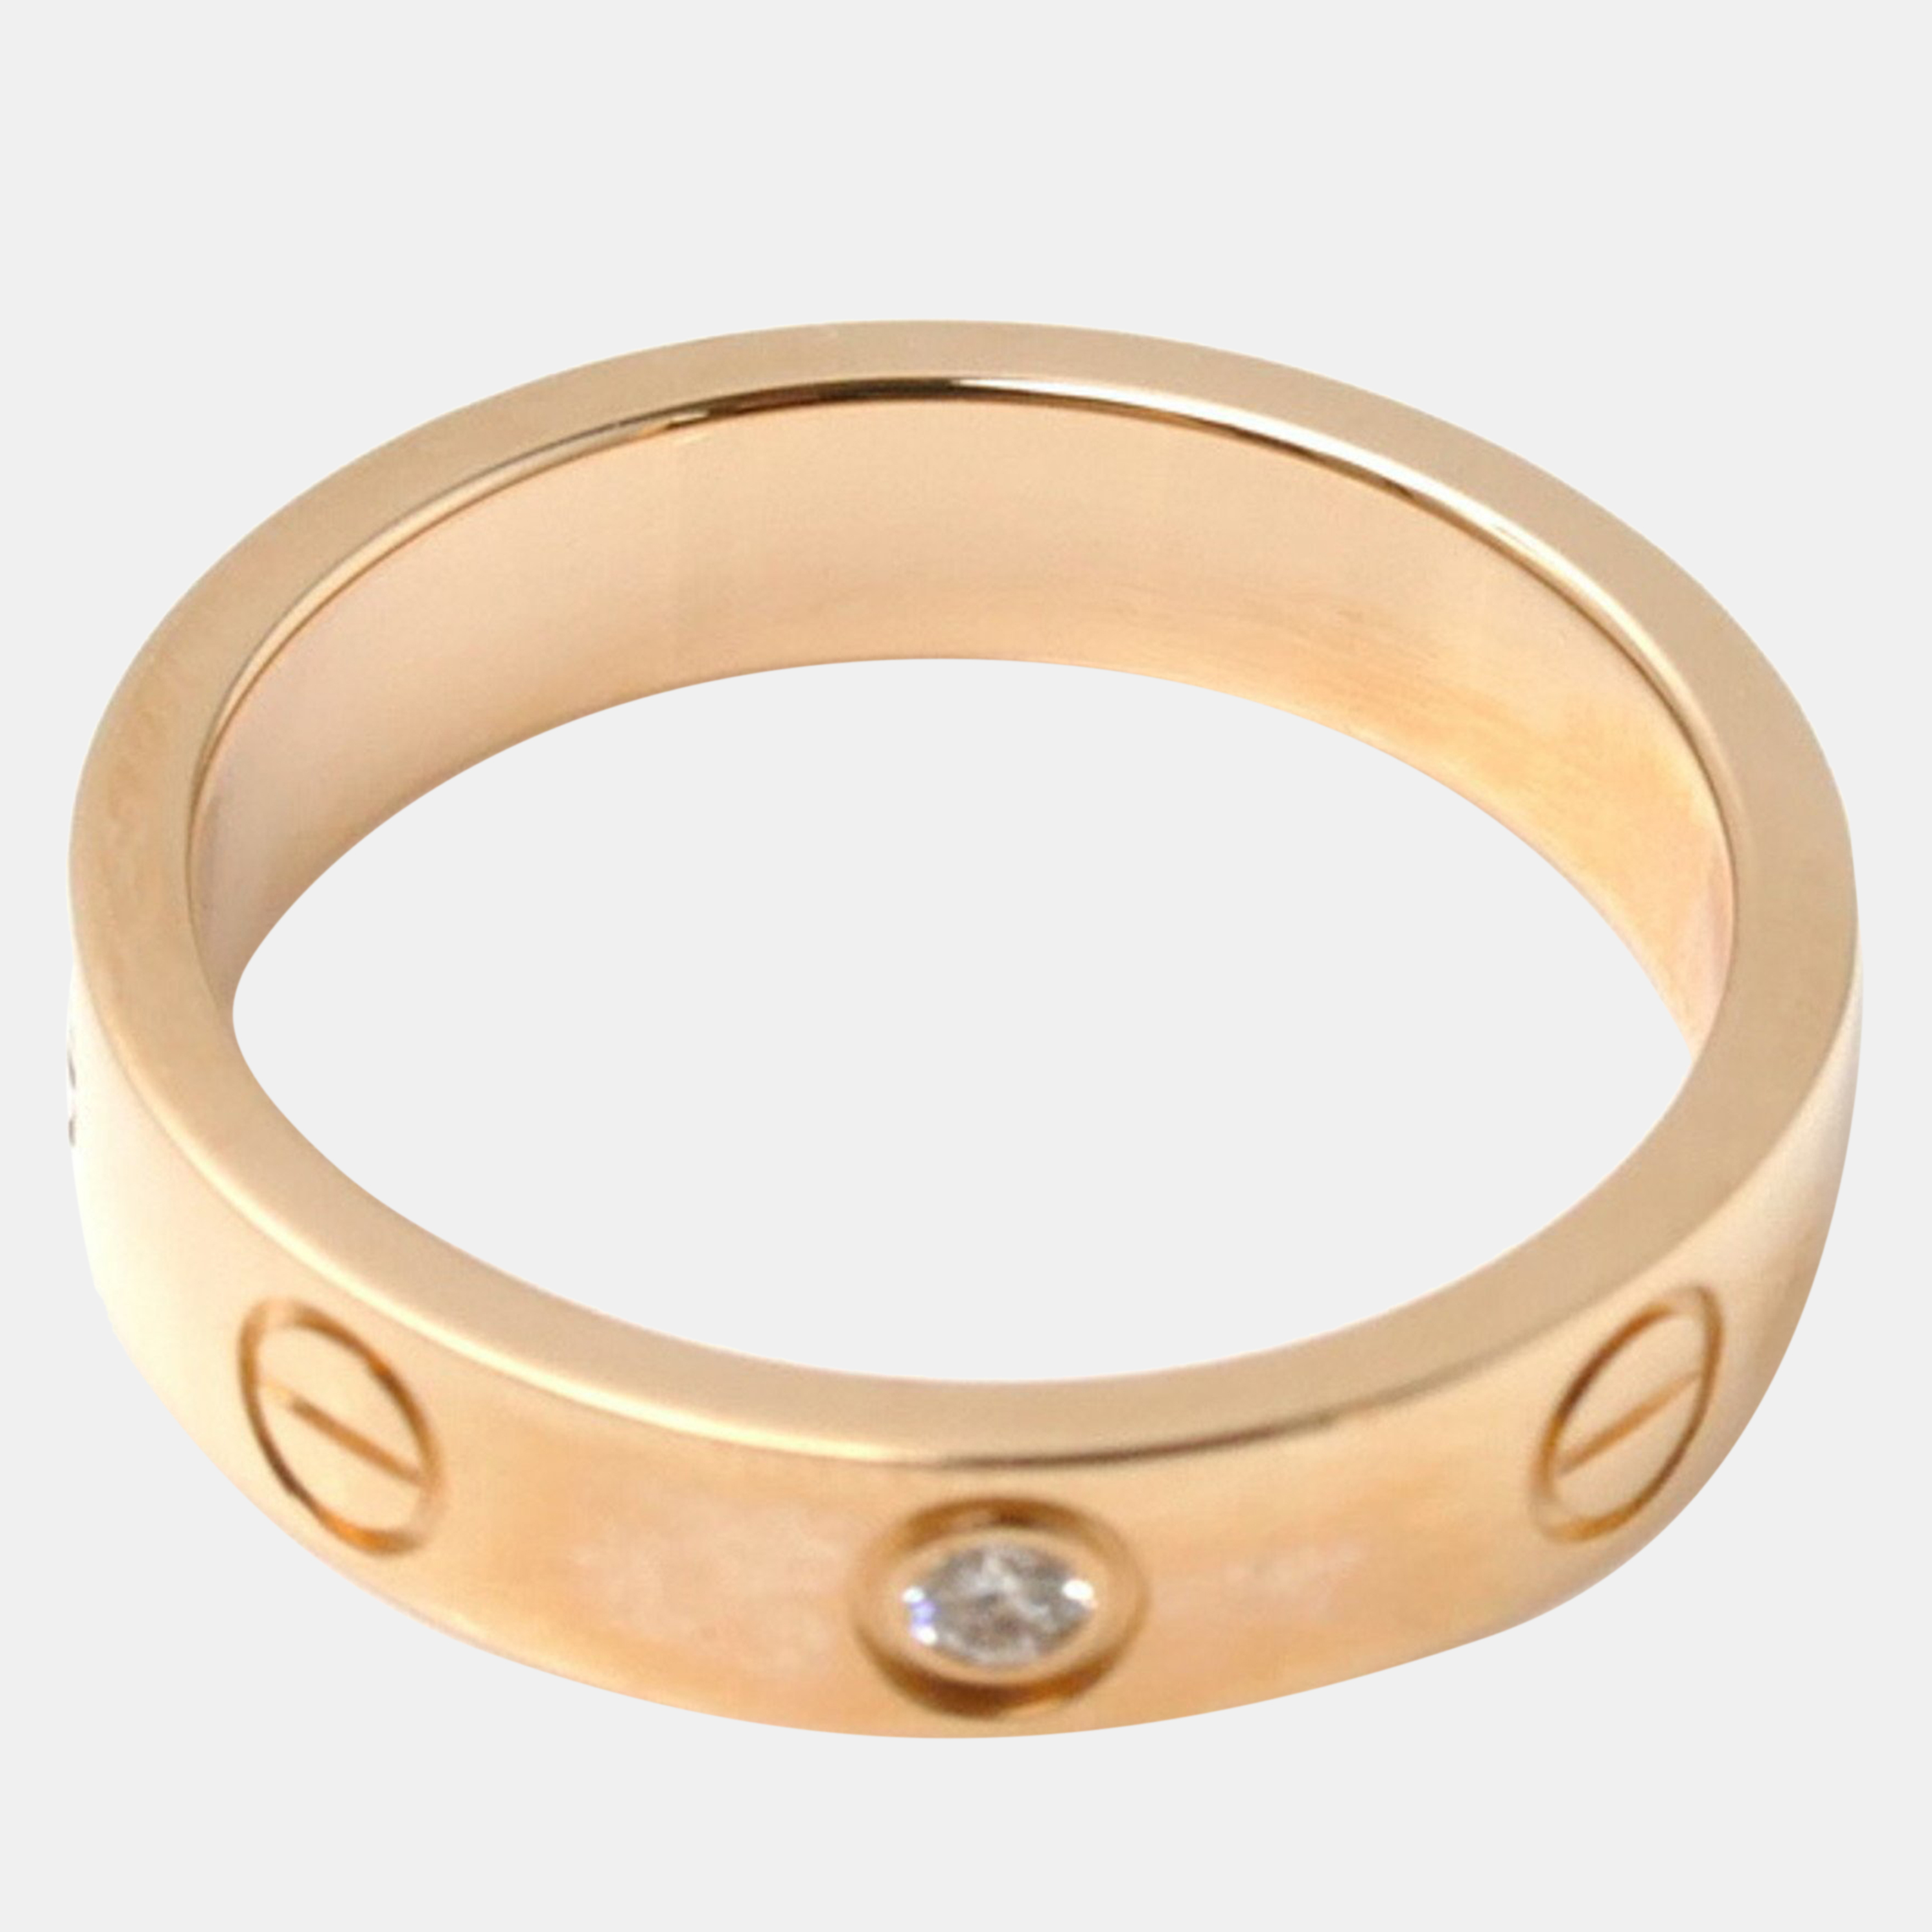 Cartier 18K Rose Gold And 1 Diamond Love Band Ring EU 49